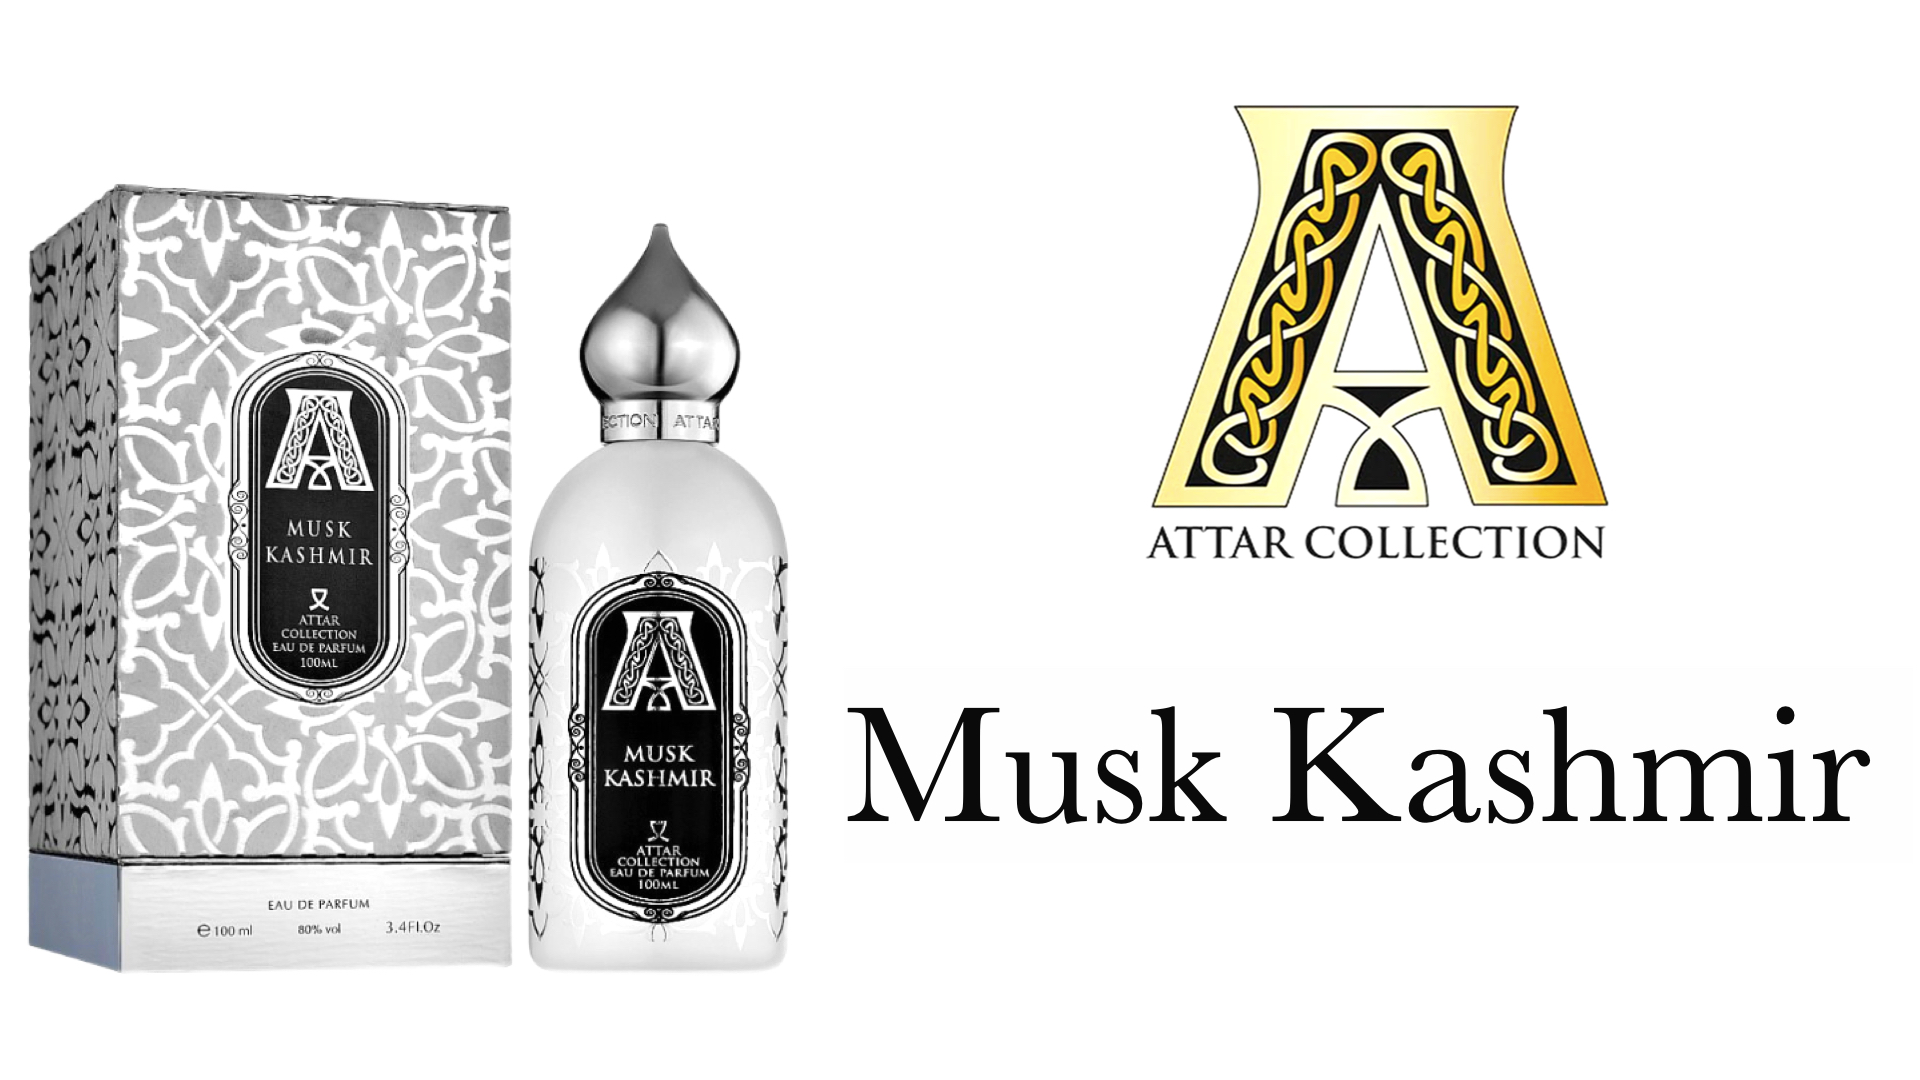 Kashmir attar collection отзывы. Аромат Musk Kashmir. Attar collection Musk Kashmir. Attar Musk Kashmir. Musk Kashmir аромат какой.